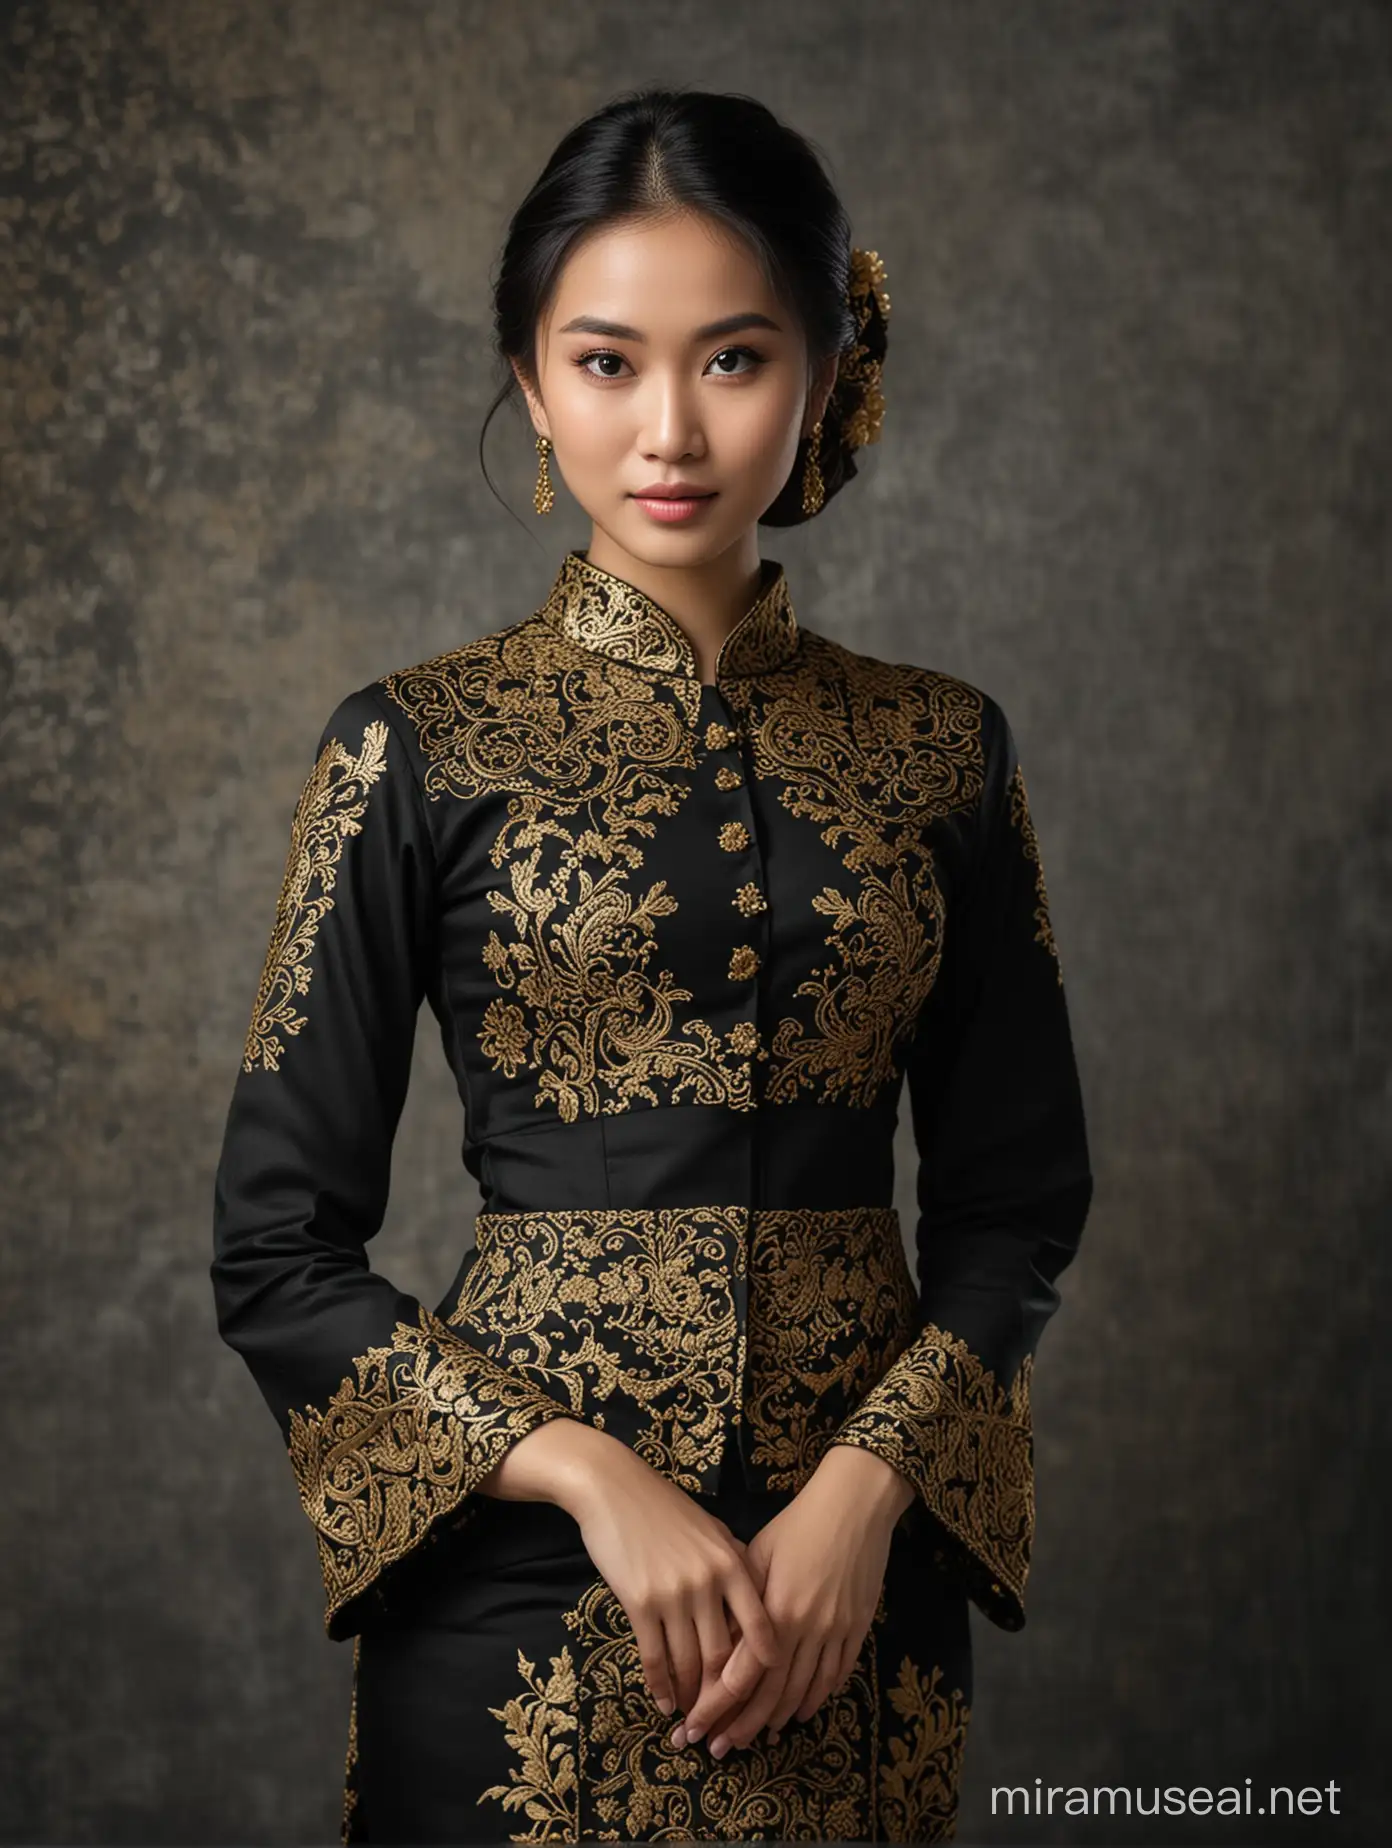 Elegant Javanese Batik Fashion Portrait Beautiful Girl in Black Kebaya and Gold Embroidery